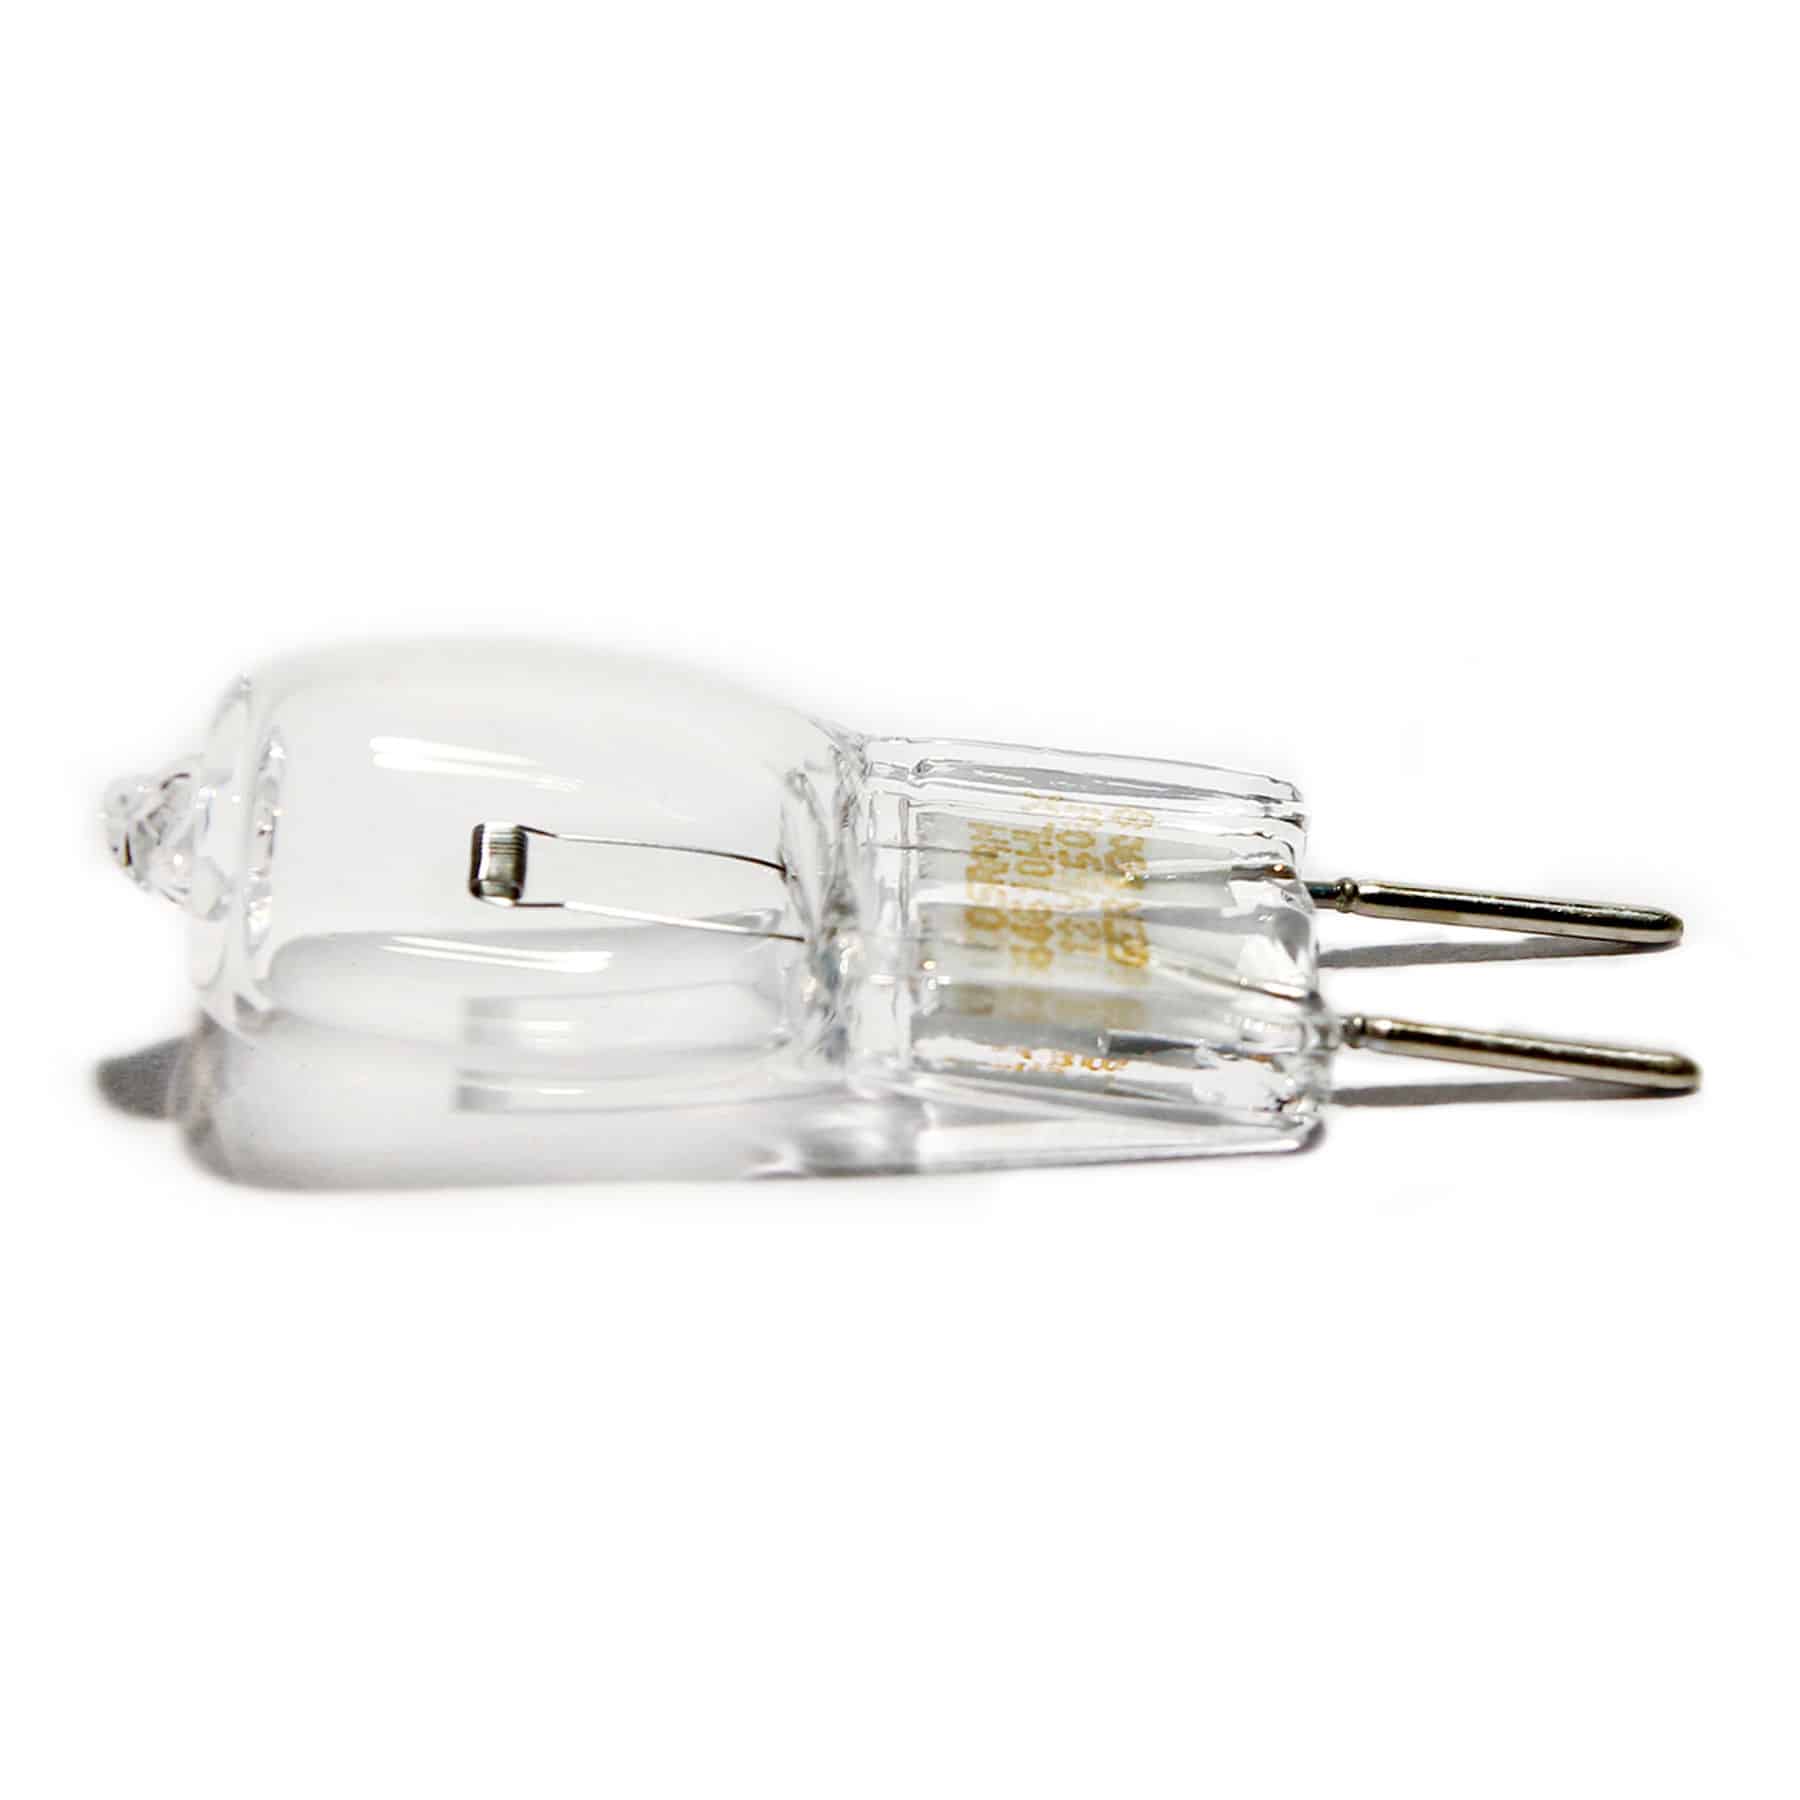 A1/220 12 volt 50 watt Projector/Photographic/Specialist Lighting Lamp 